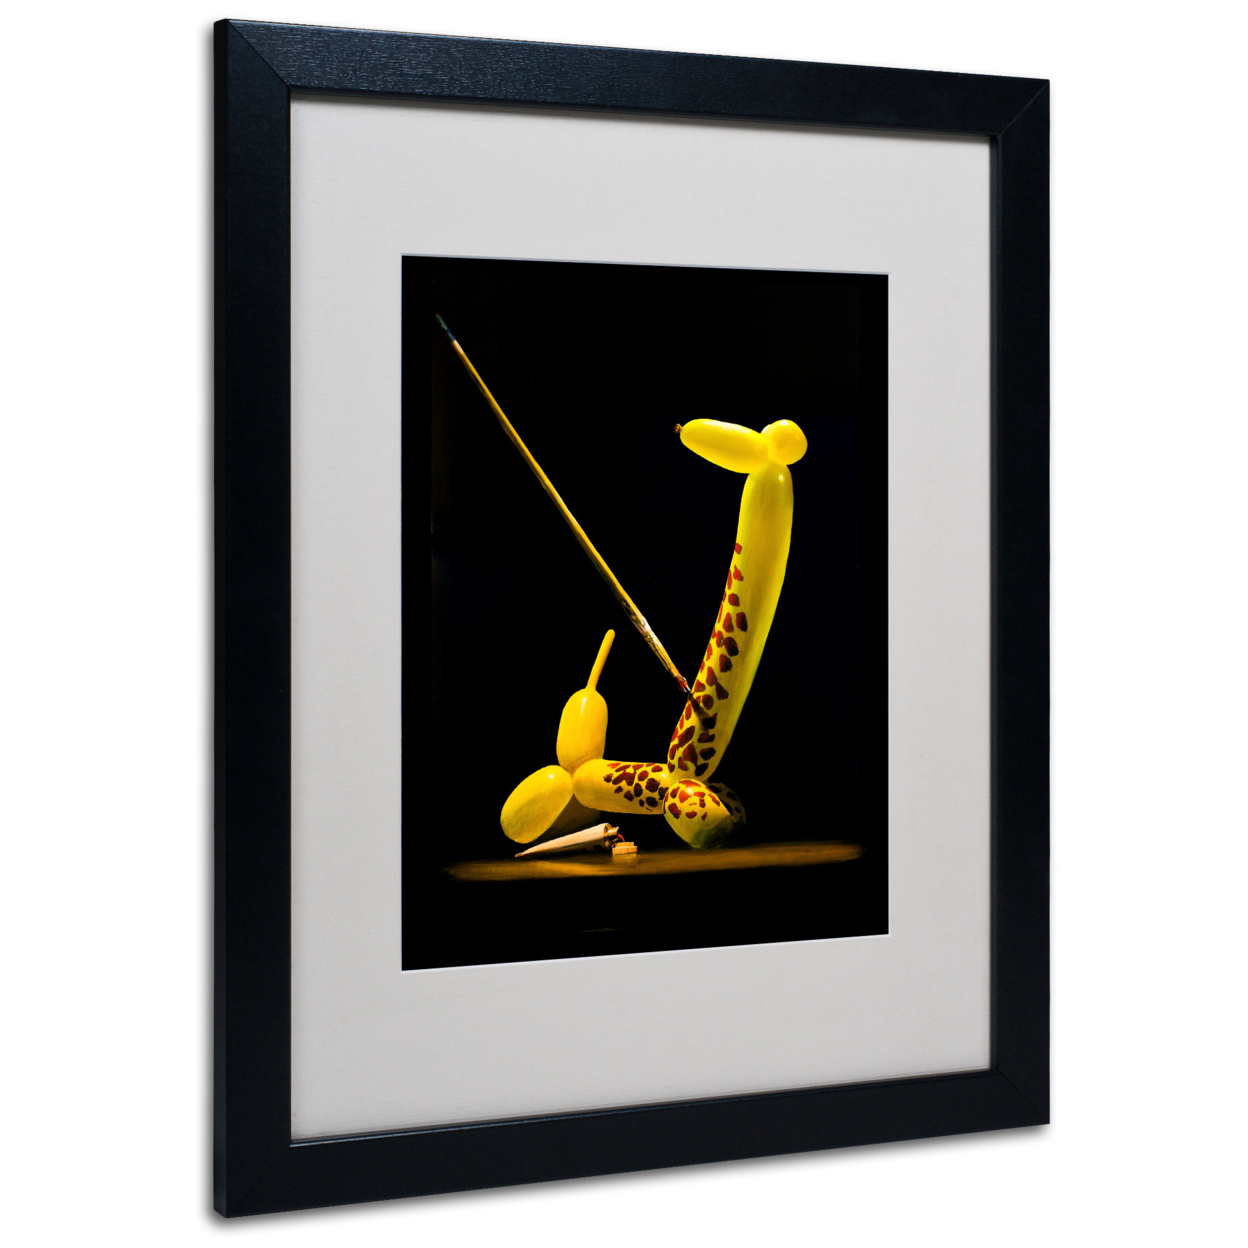 Roderick Stevens 'Balloon Giraffe' Black Wooden Framed Art 18 X 22 Inches